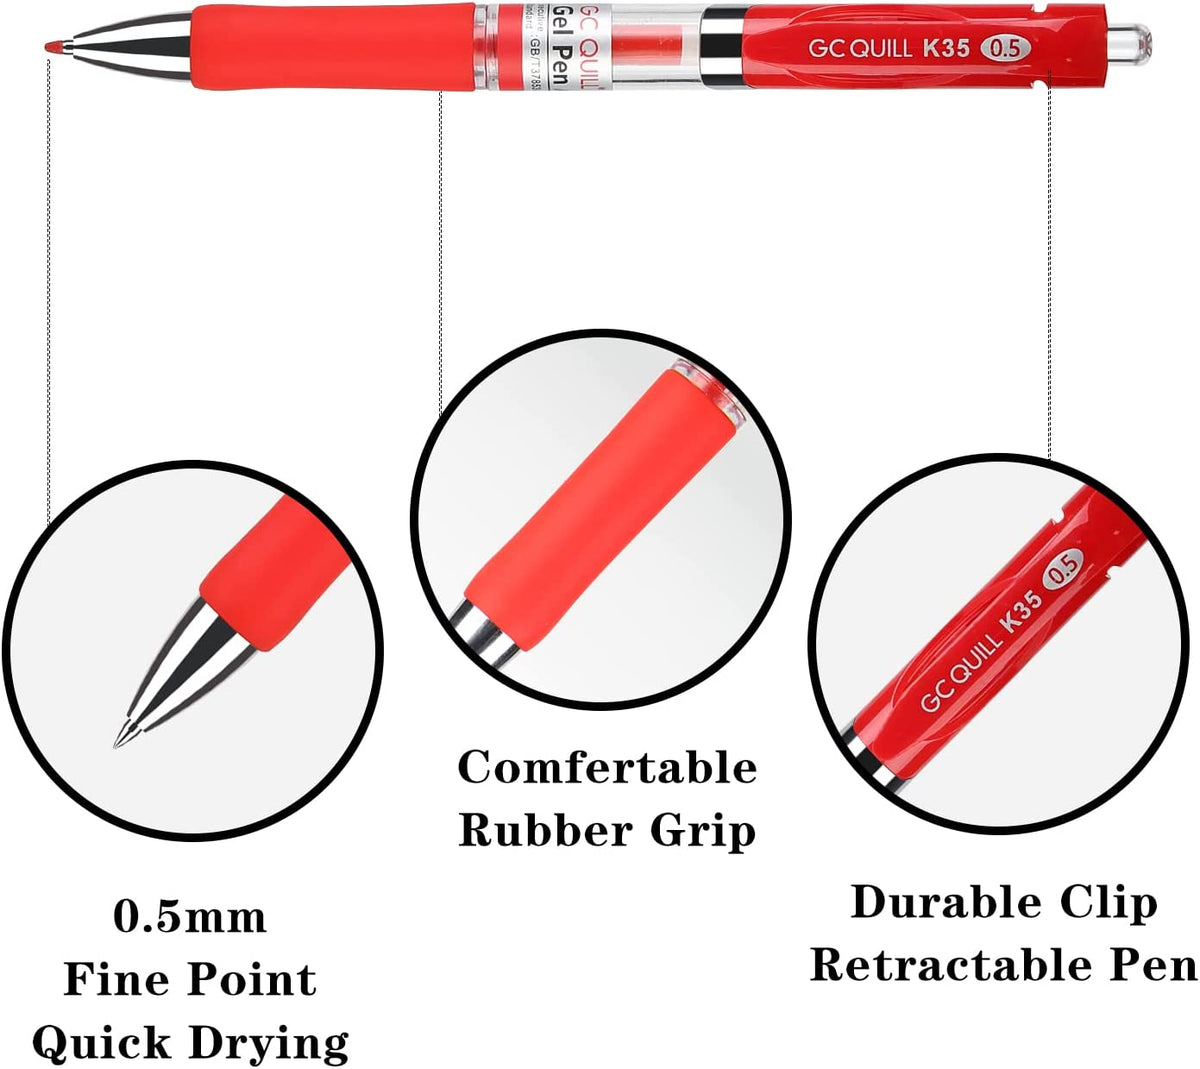 Glass Dip Pen Set - 2 Glass Dip Pens, 12 Multicoloured Ink, 1 Pen